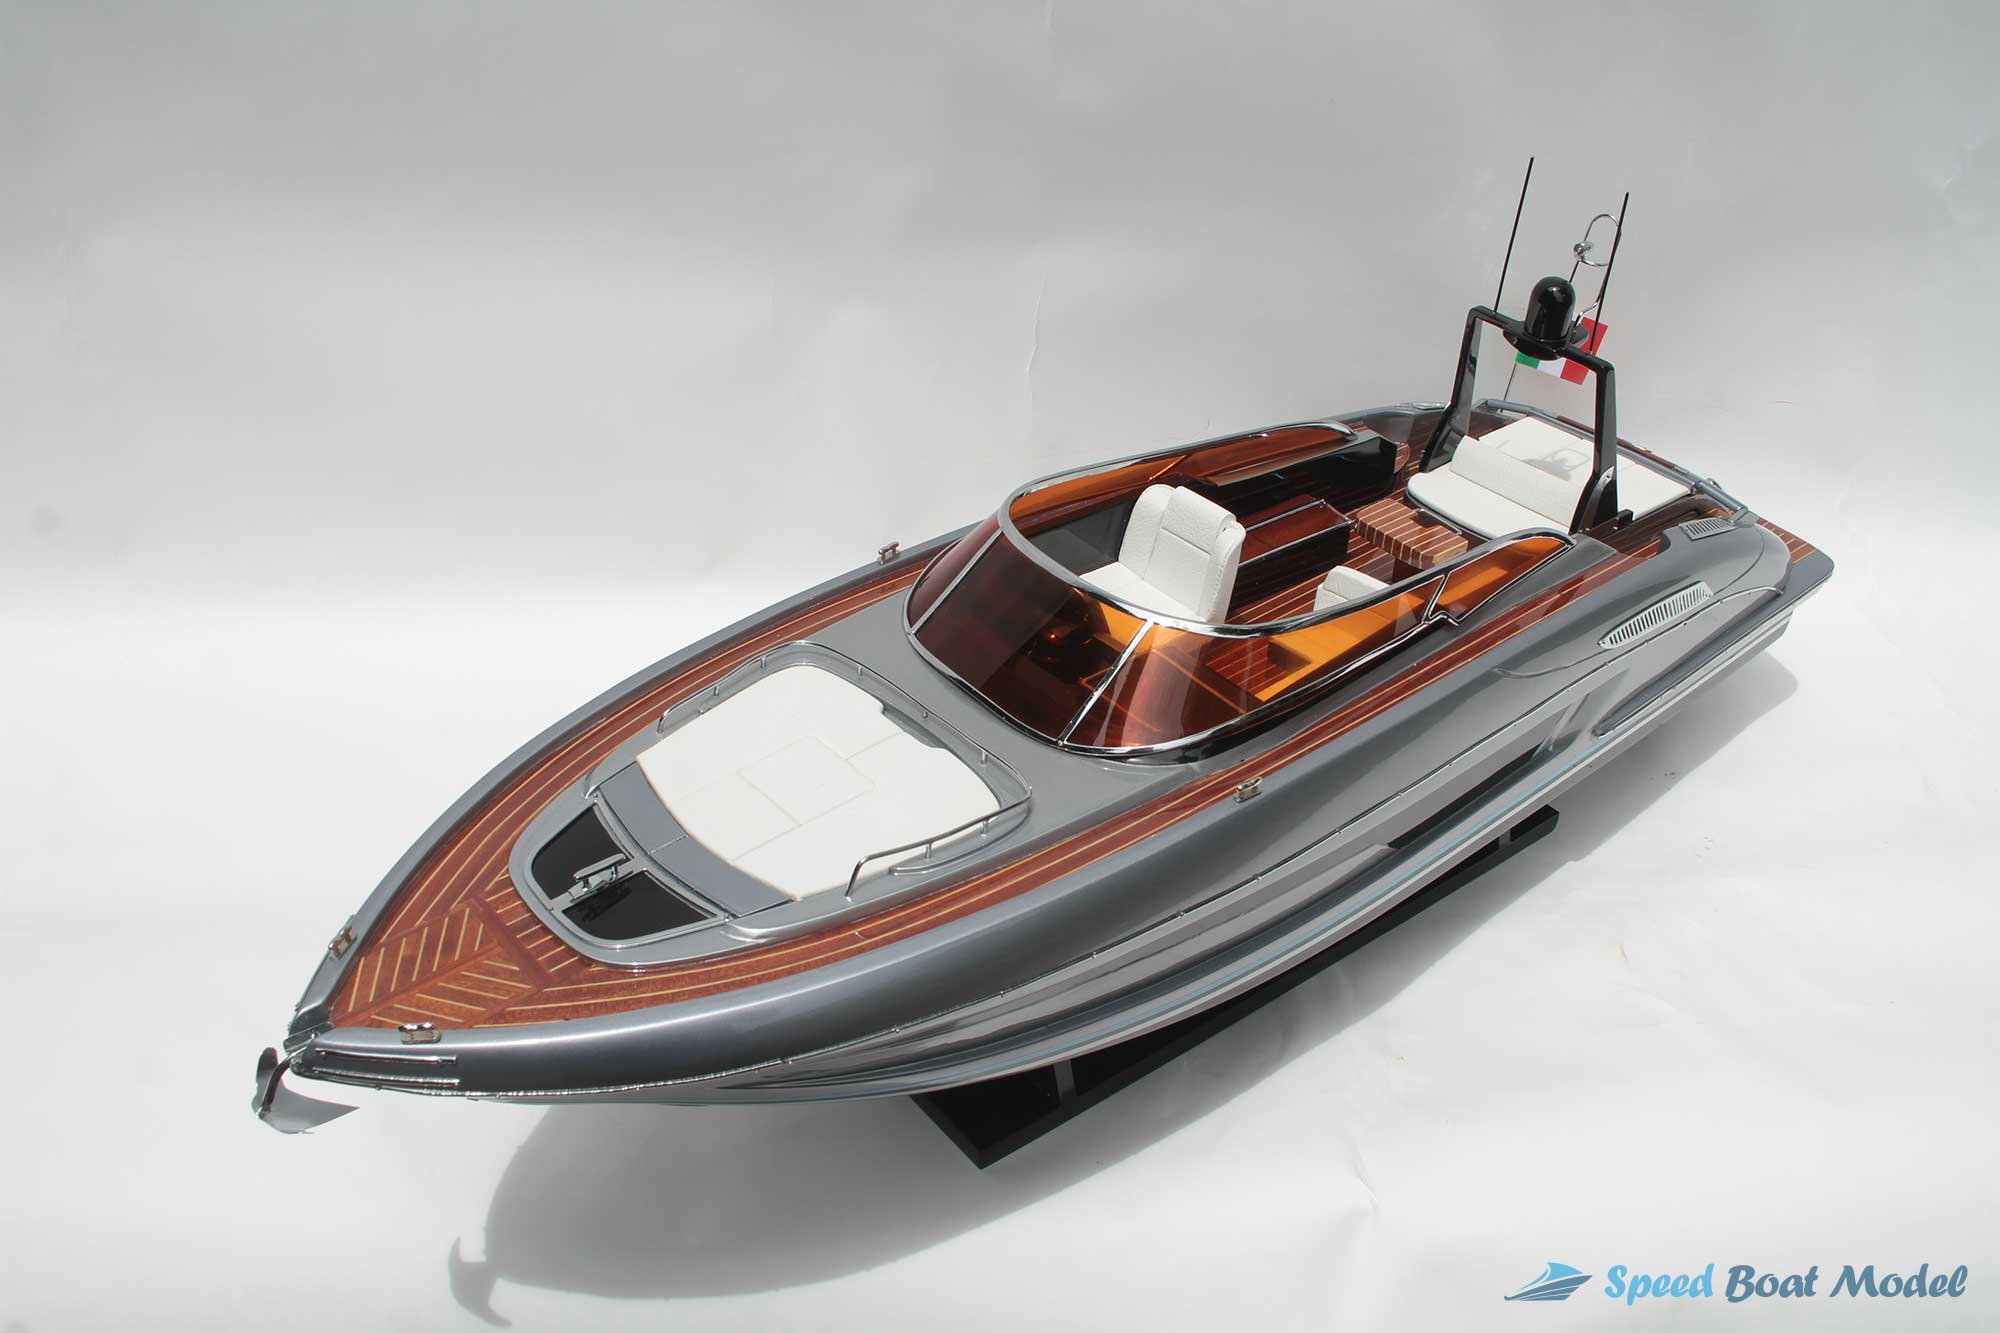 Grey Shark Black Riva Rivale 56 Classic Speed Boat Model 33"